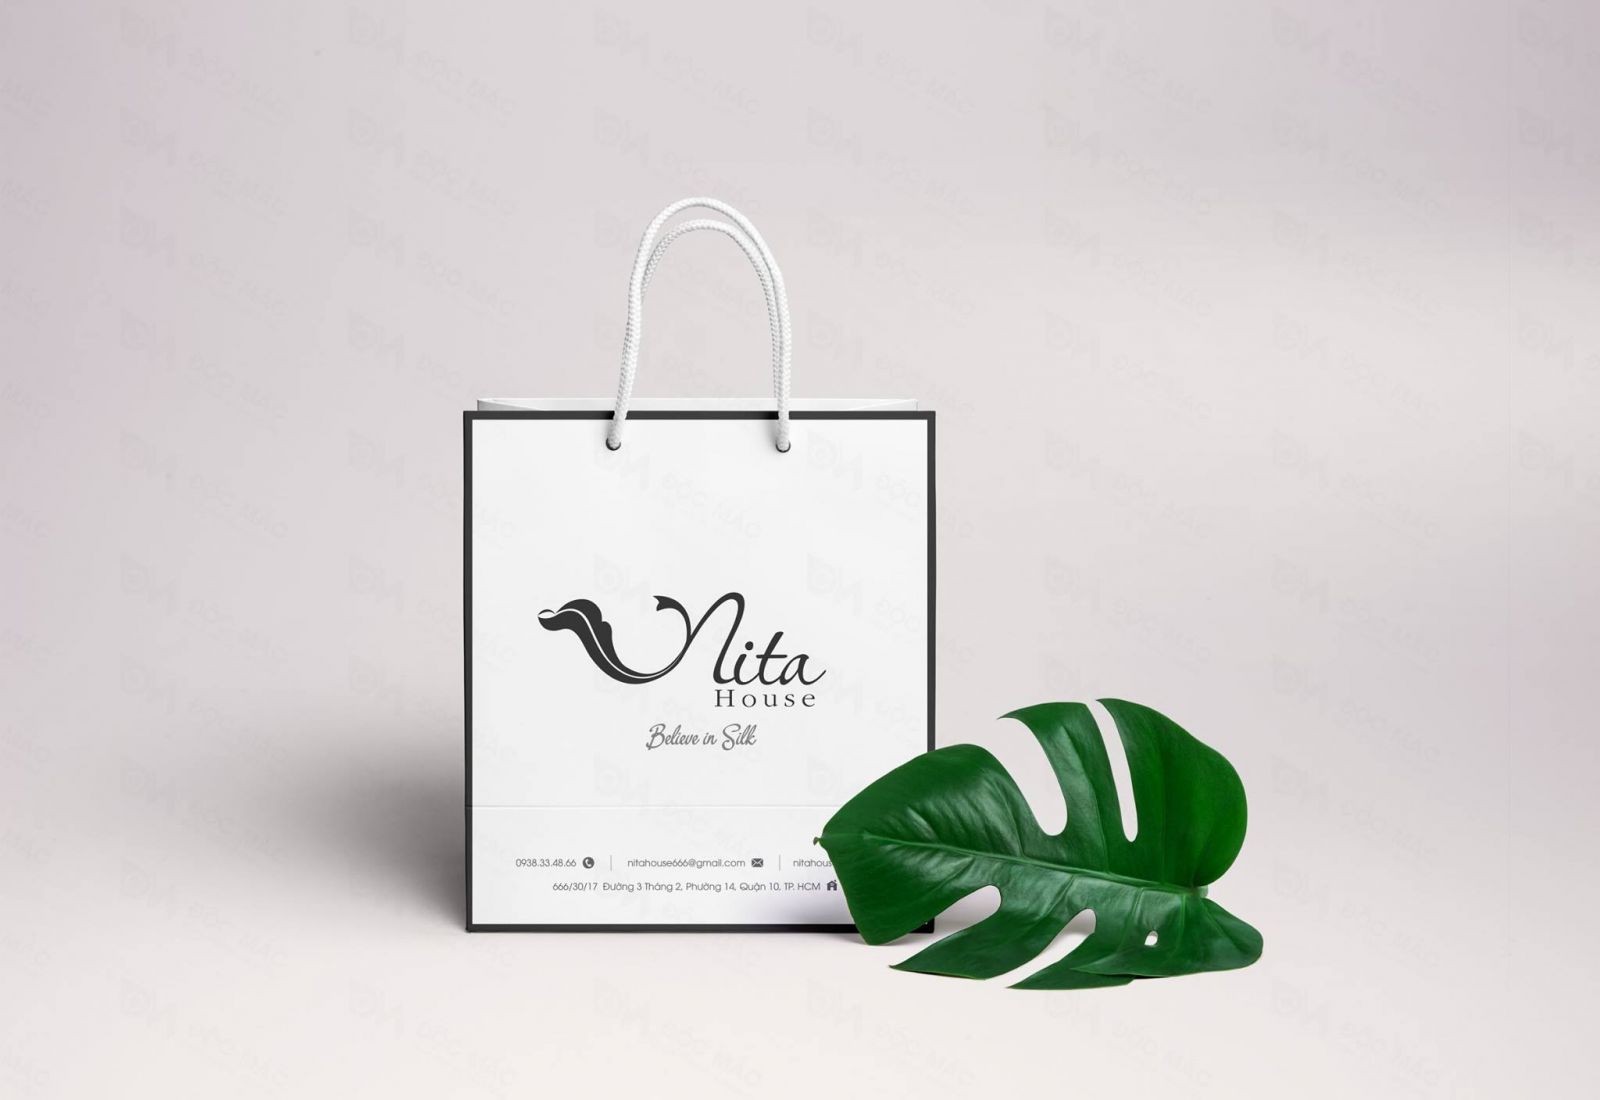 Thiết kế túi giấy thời trang lụa Nita House